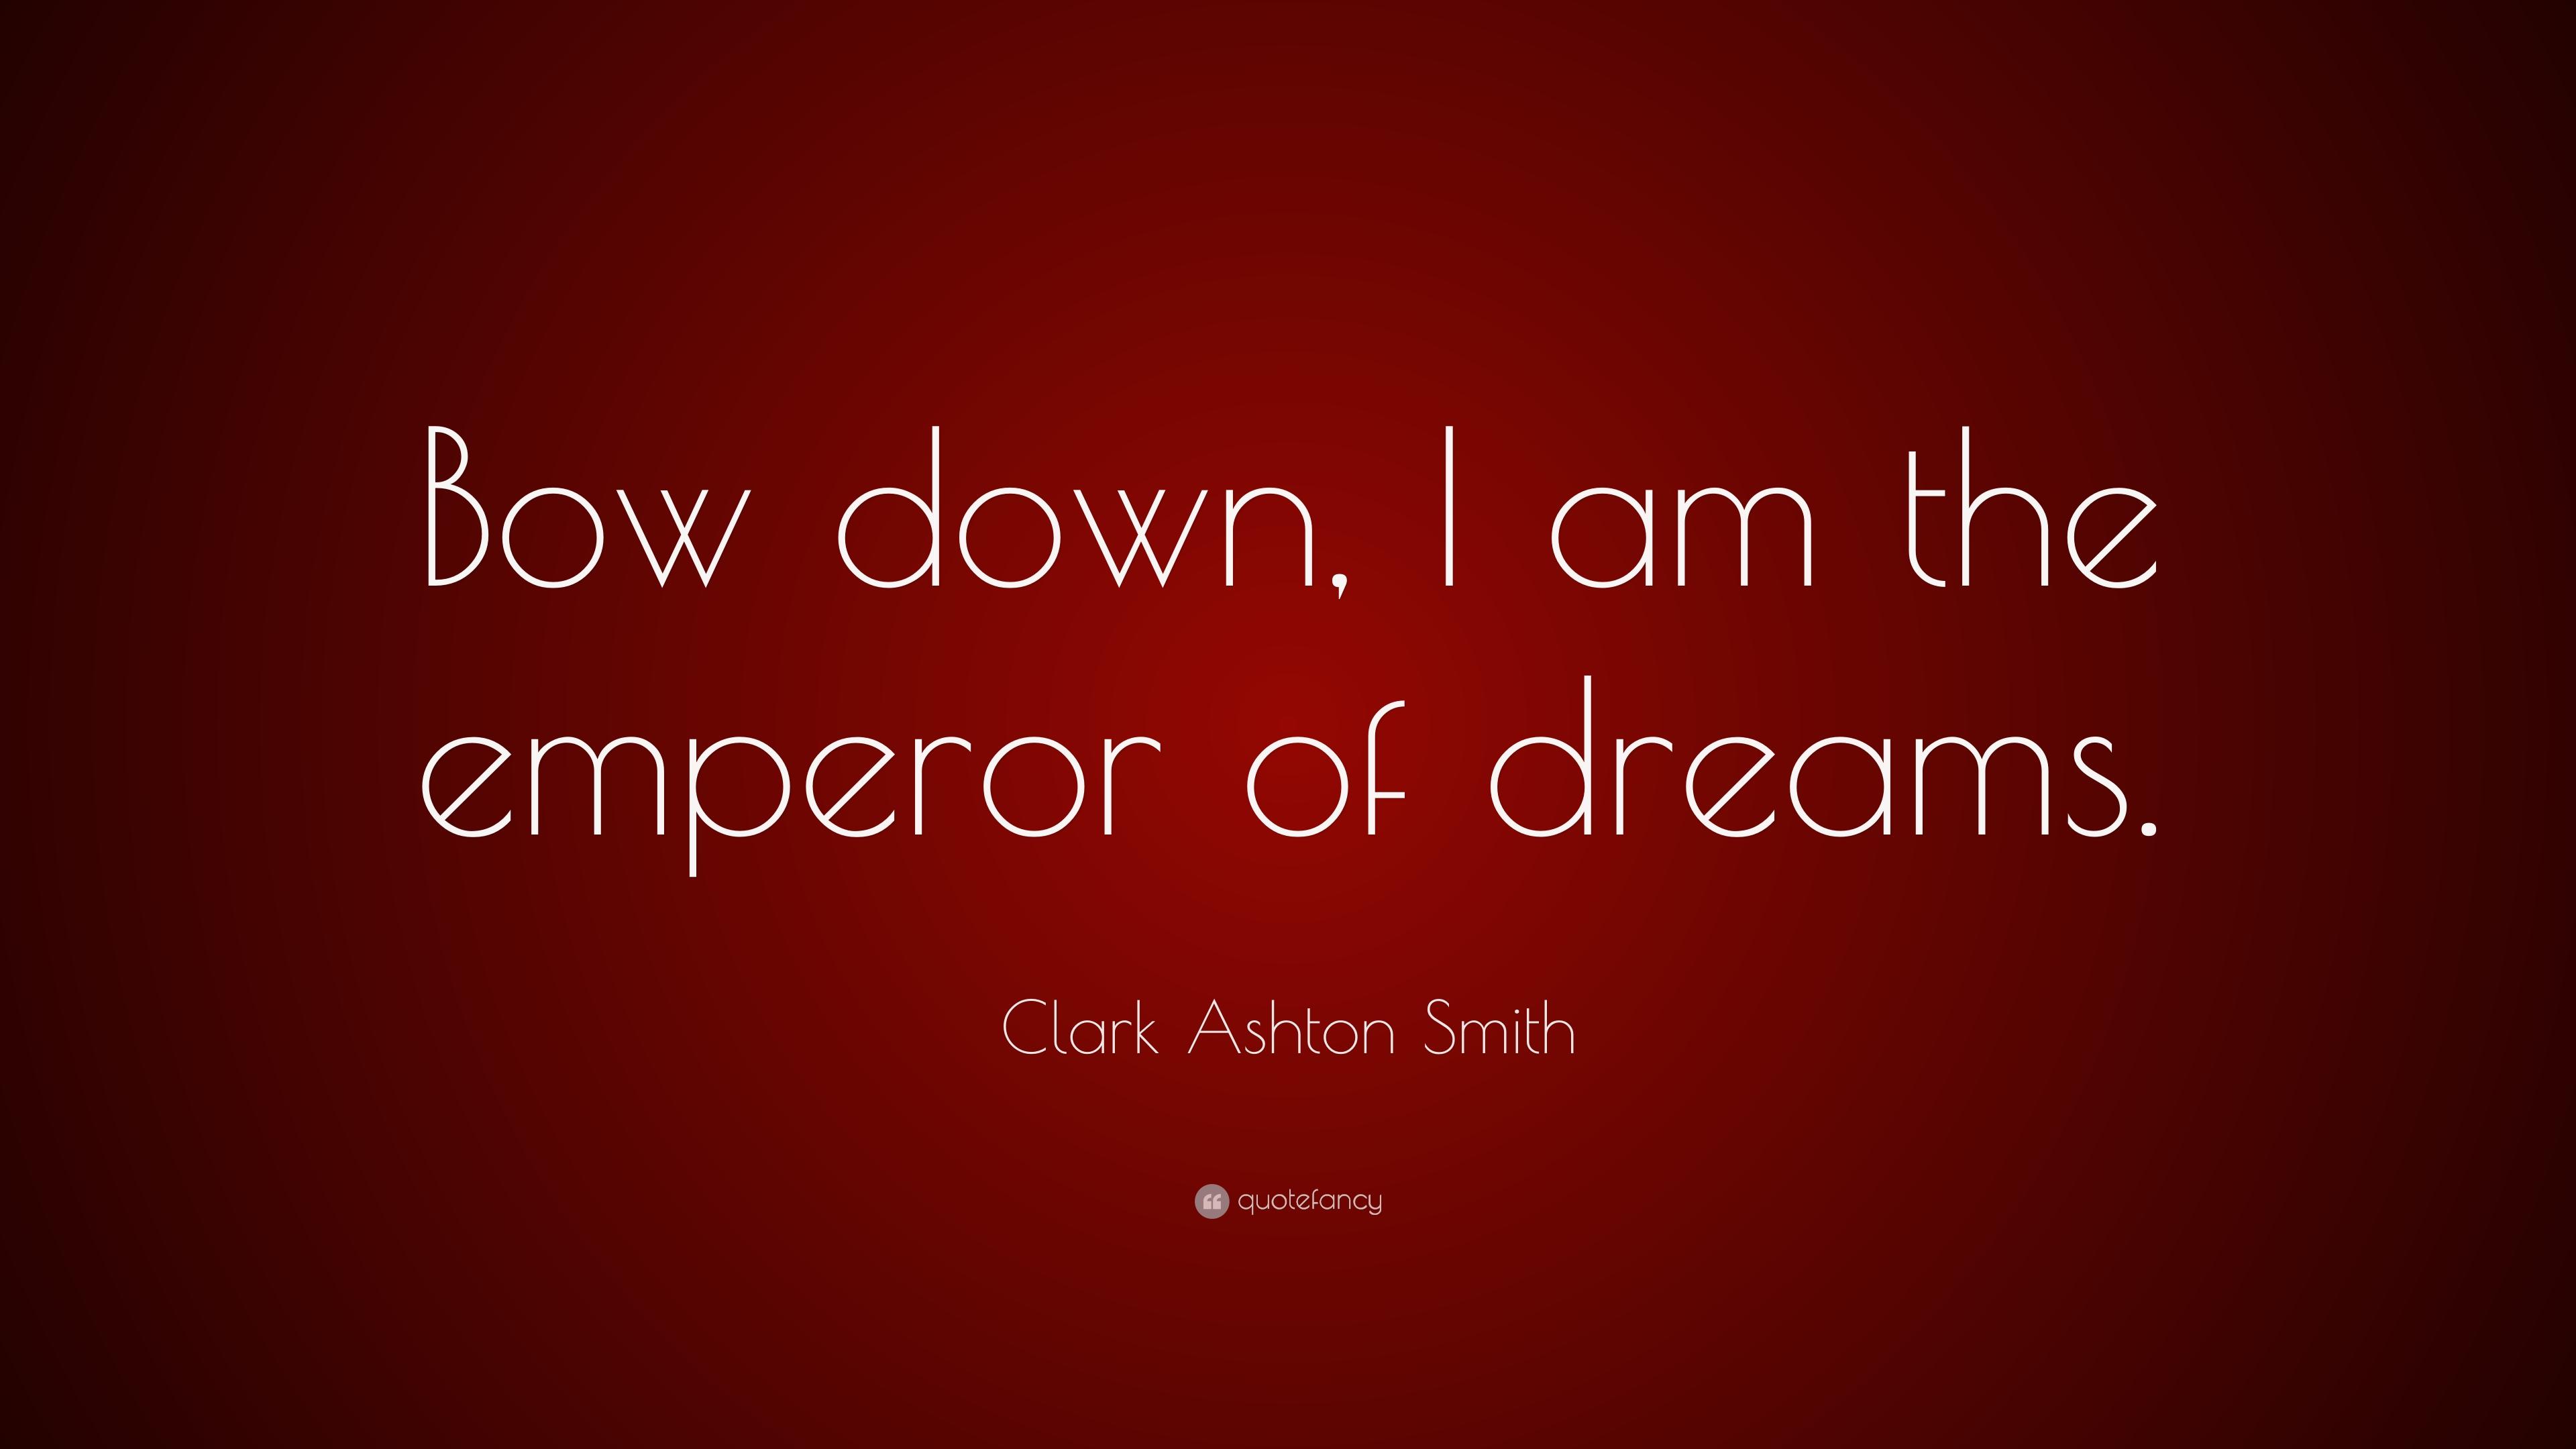 Clark Ashton Smith Quote: “Bow down, I am the emperor of dreams